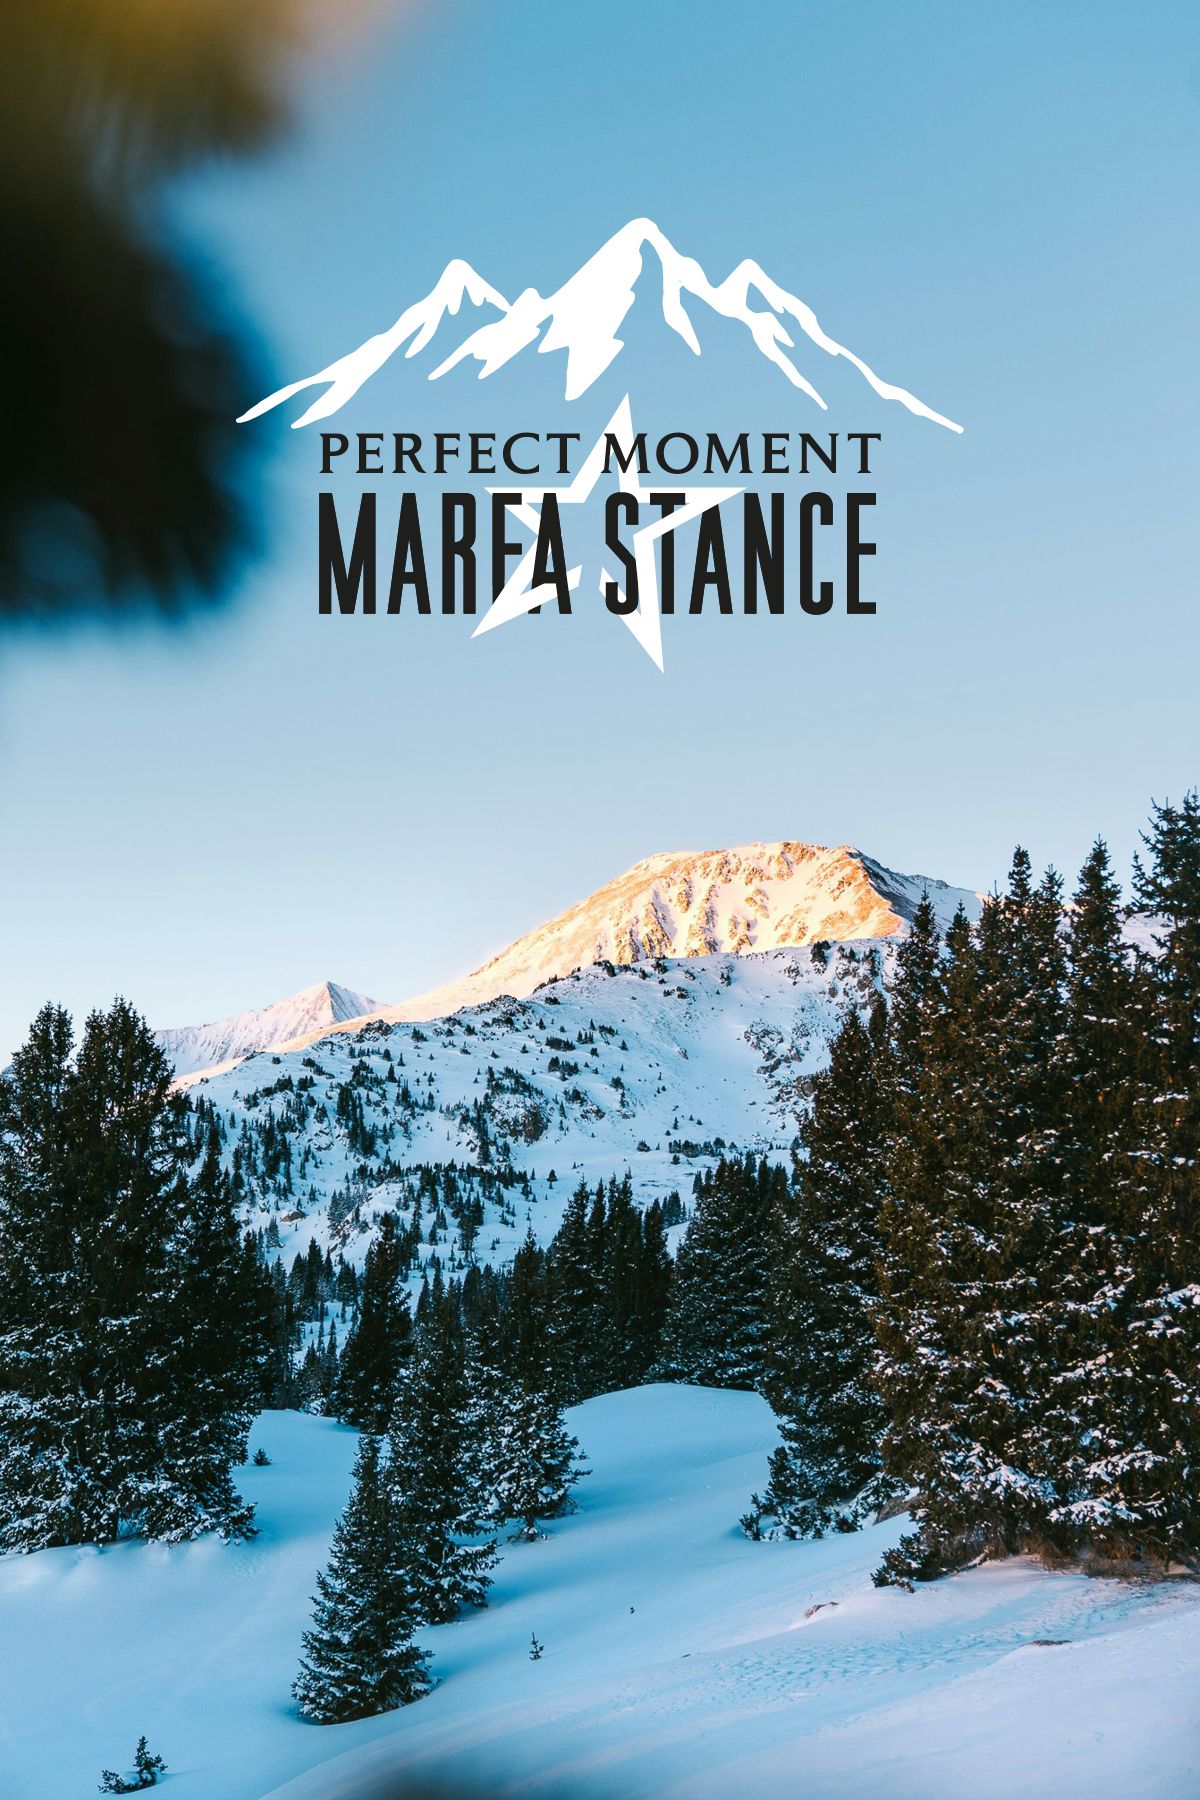 Marfa Stance x Perfect Moment | MARFA STANCE